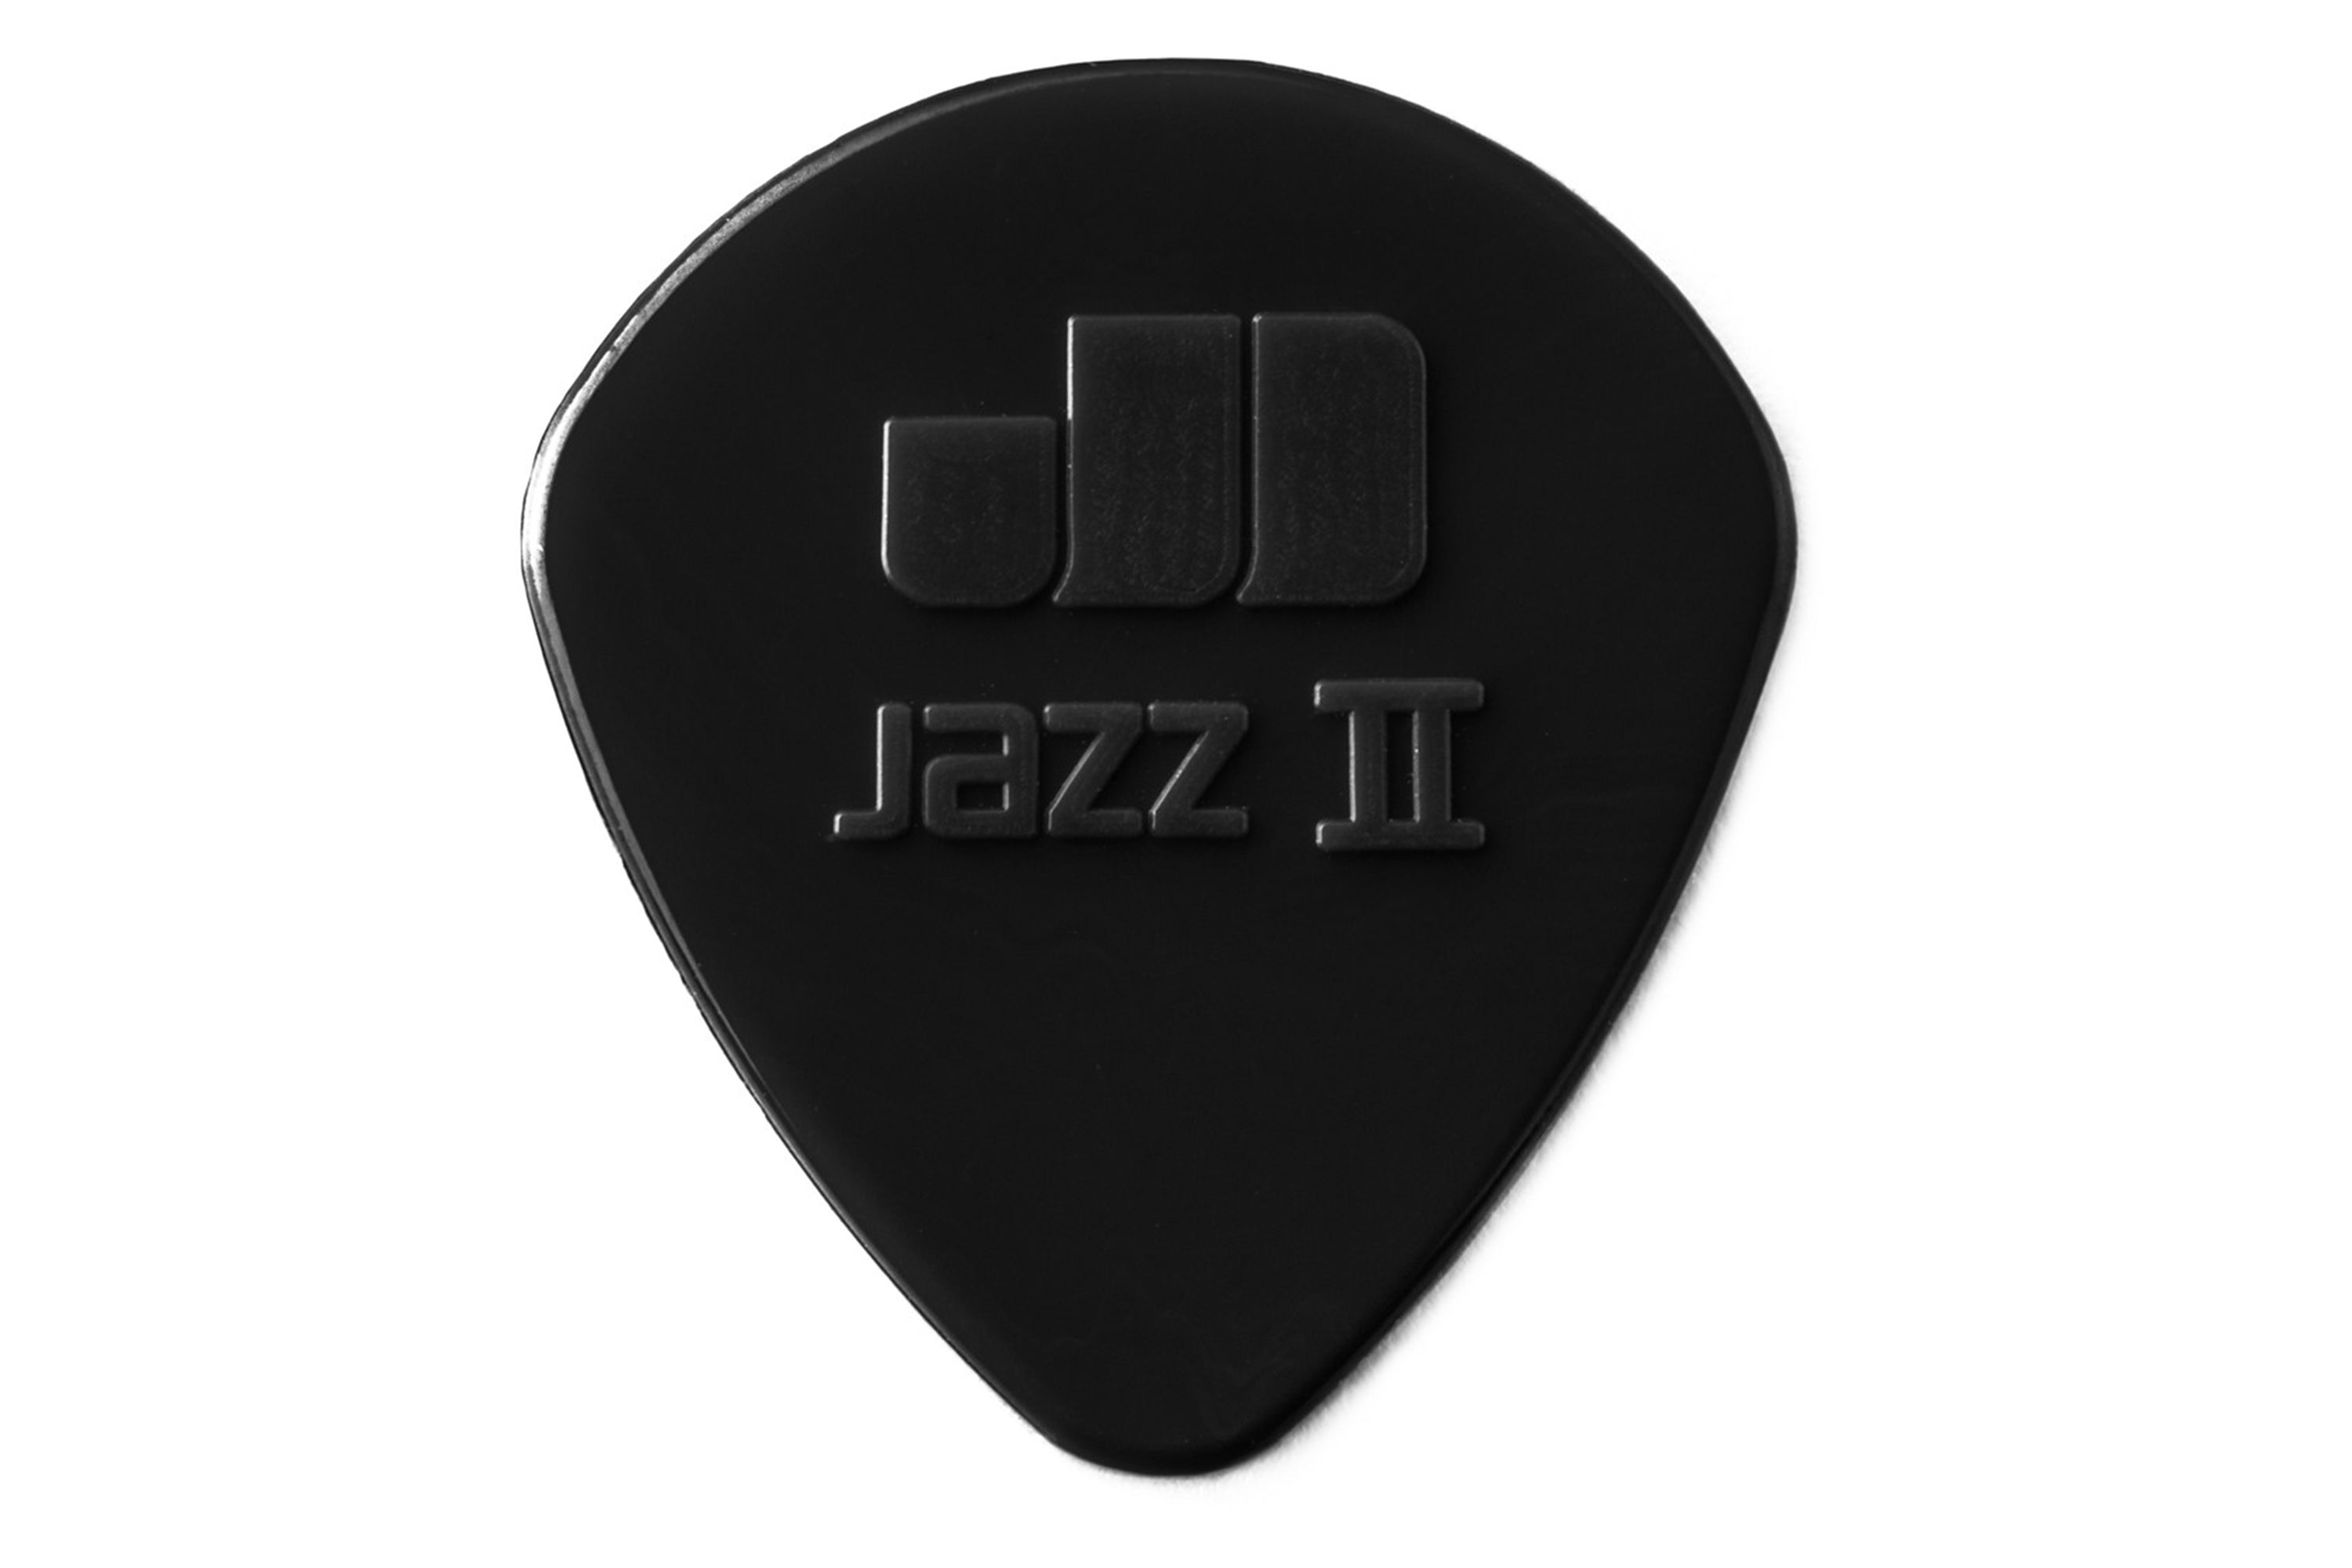 Dunlop Nylon Jazz II Stiffo Black Guitar & Ukulele Picks 6 Pack